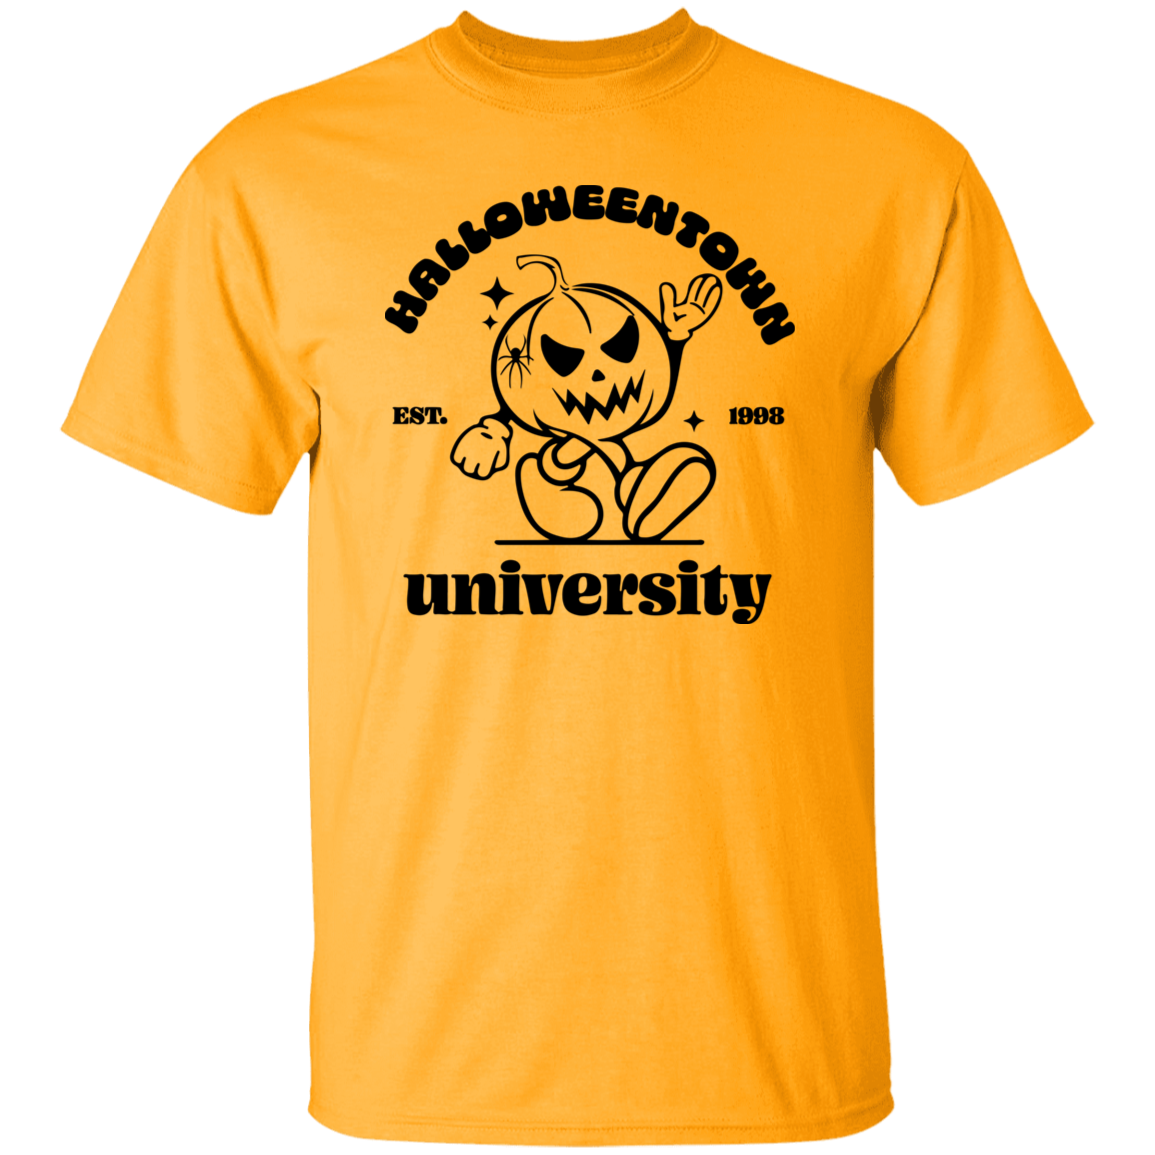 HalloweenTown University (Est. 1998)- Men's T-Shirt